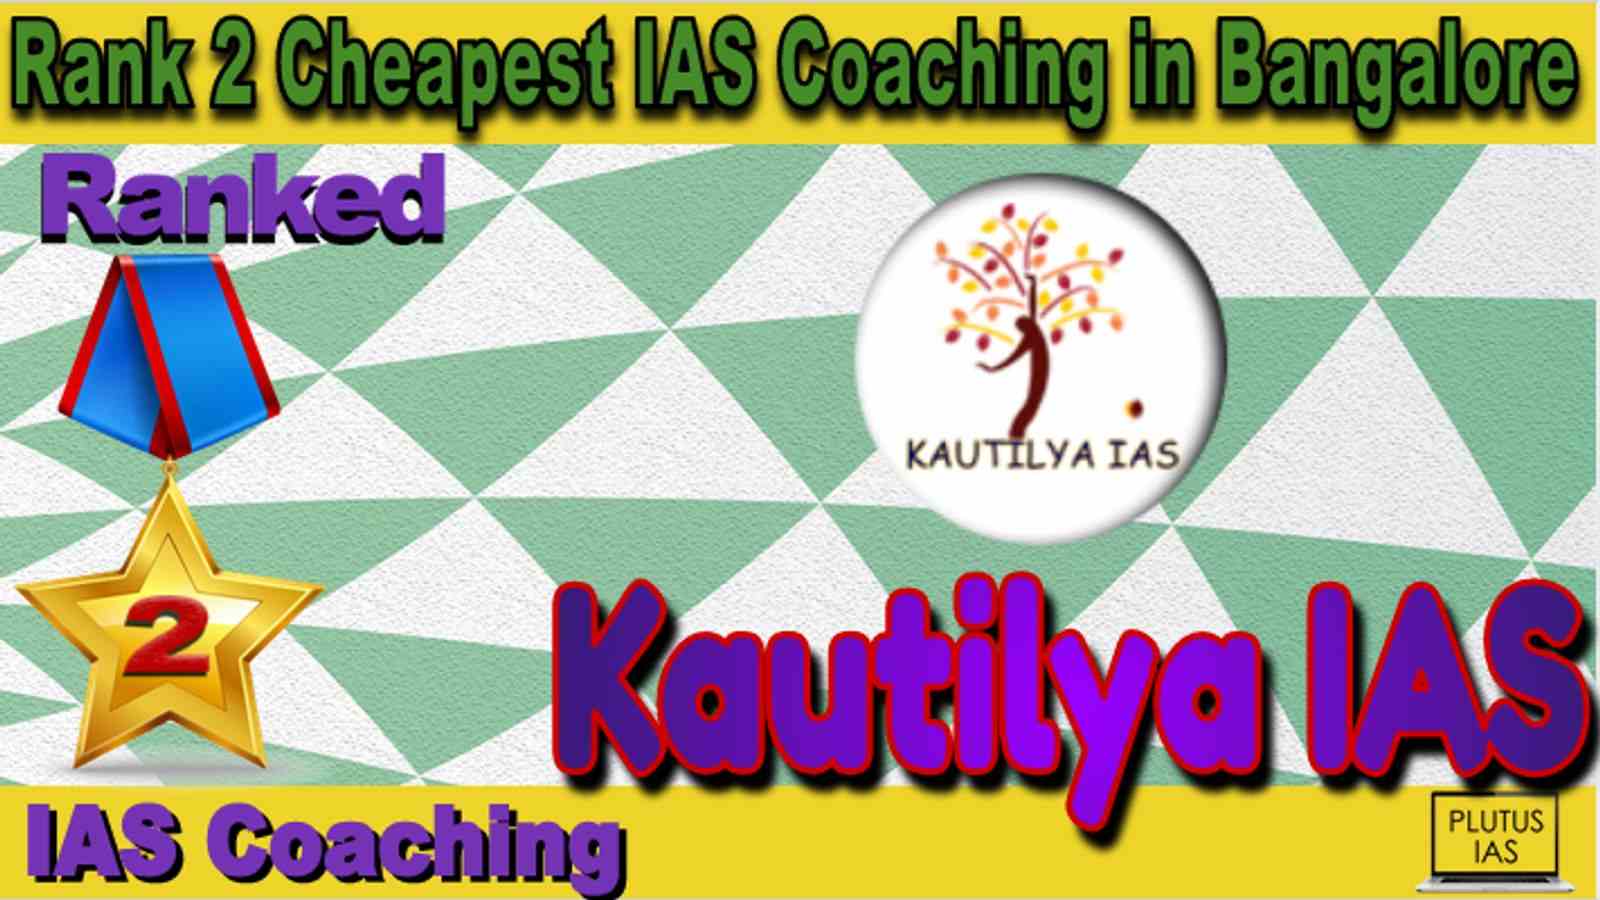 Rank 2 Cheapest IAS Coaching in Bangalore